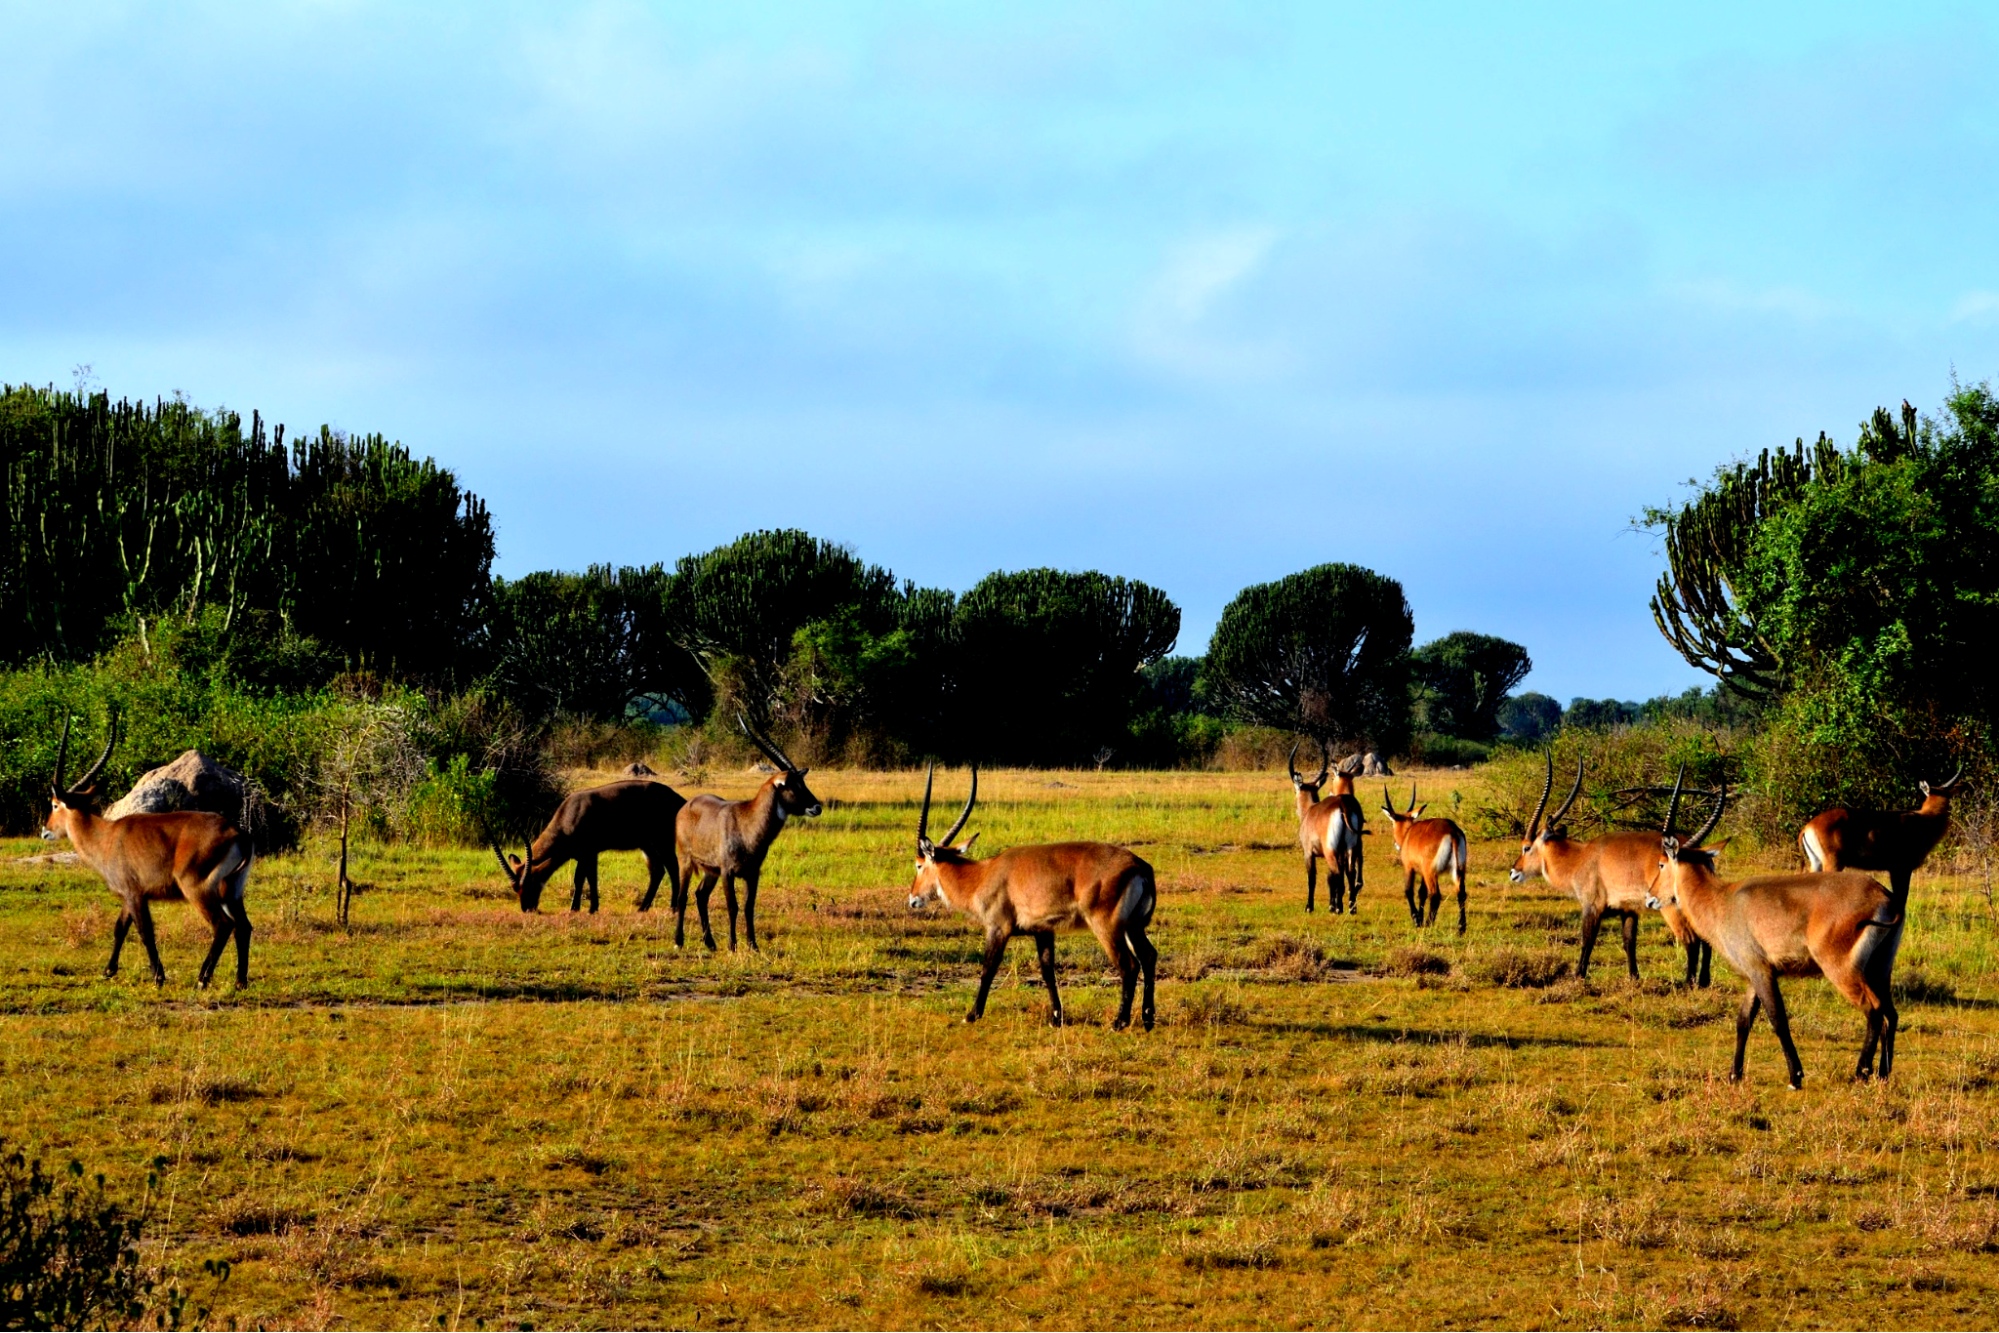 Queen Elizabeth national park, Uganda